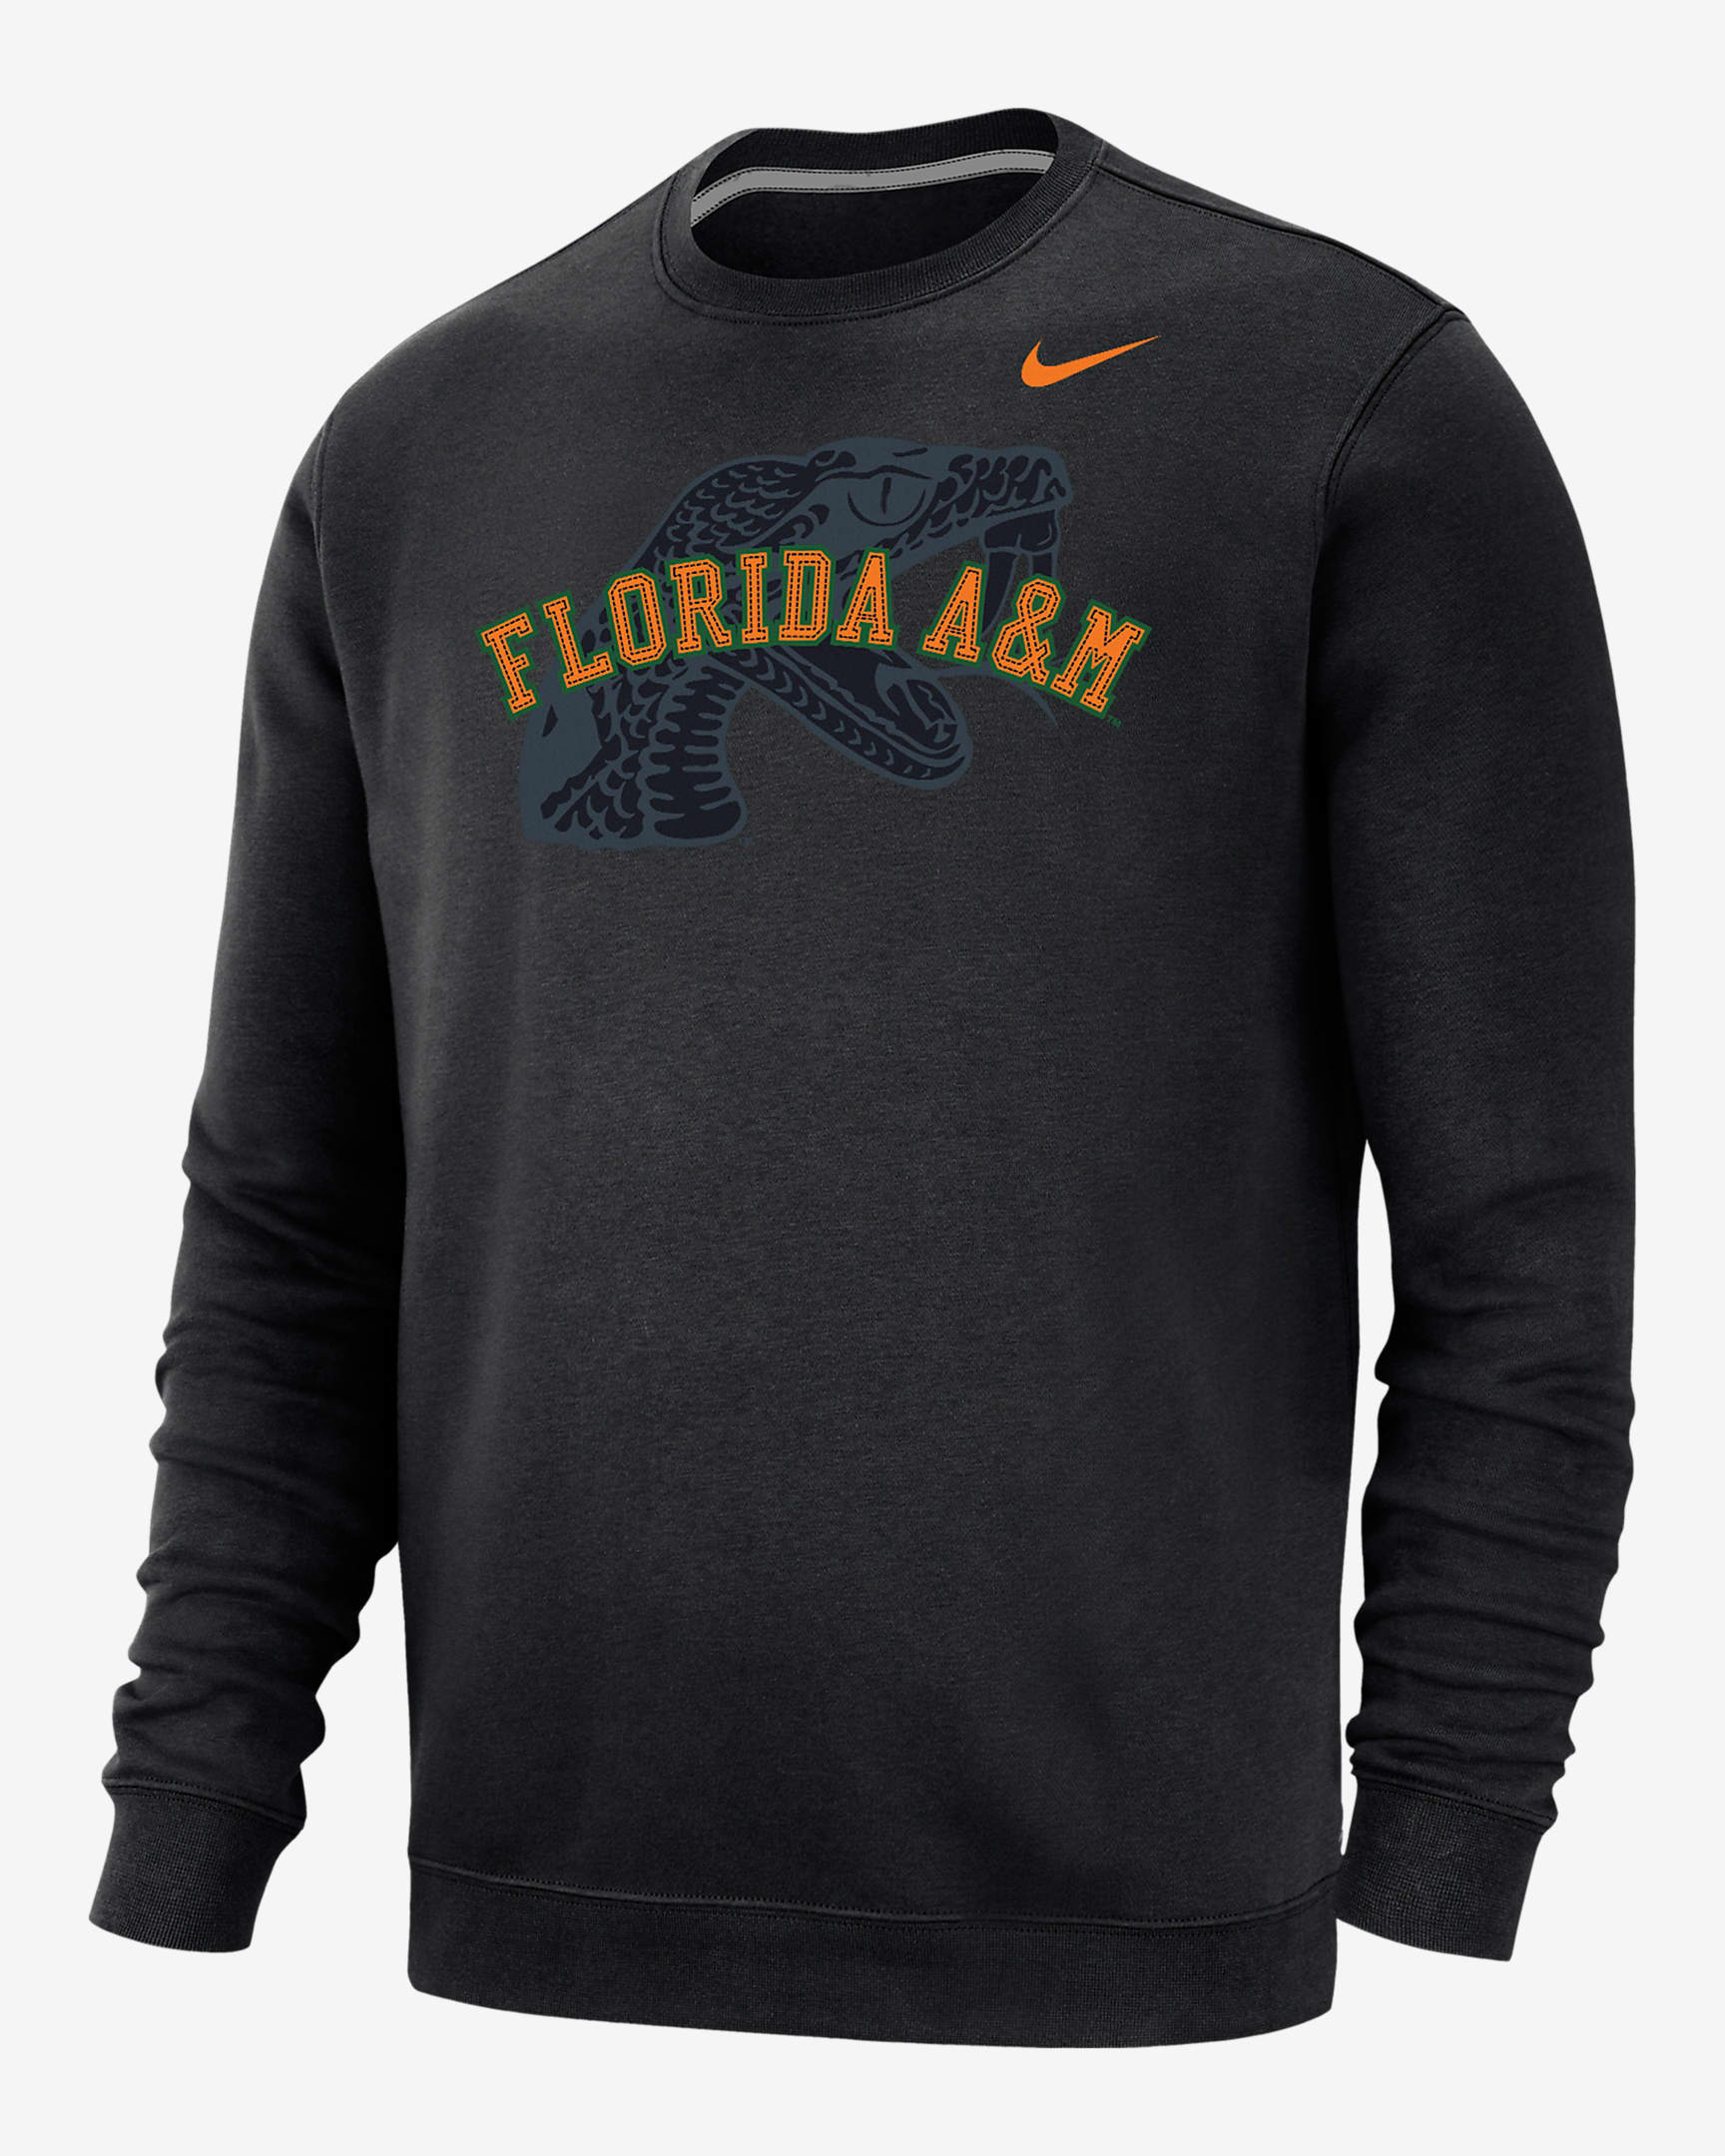 Nike College Club Fleece (FAMU) Men's Sweatshirt. Nike.com